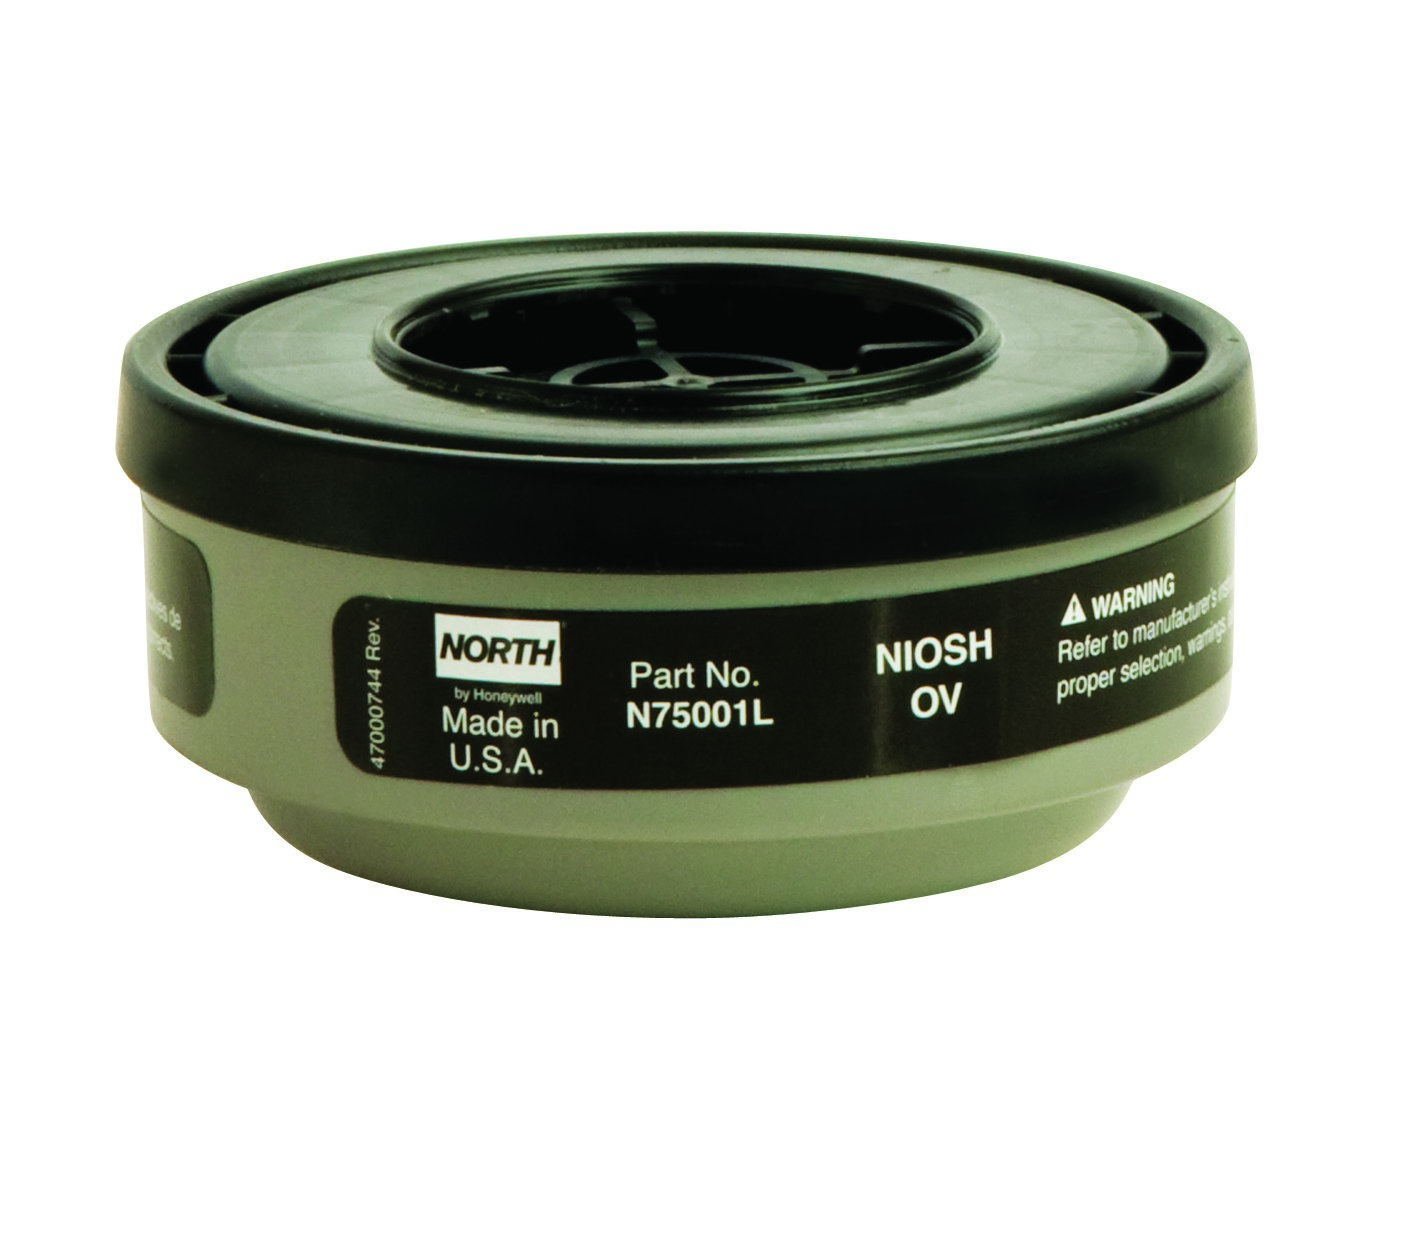 North N-Series Cartridges, Filters and Lenses